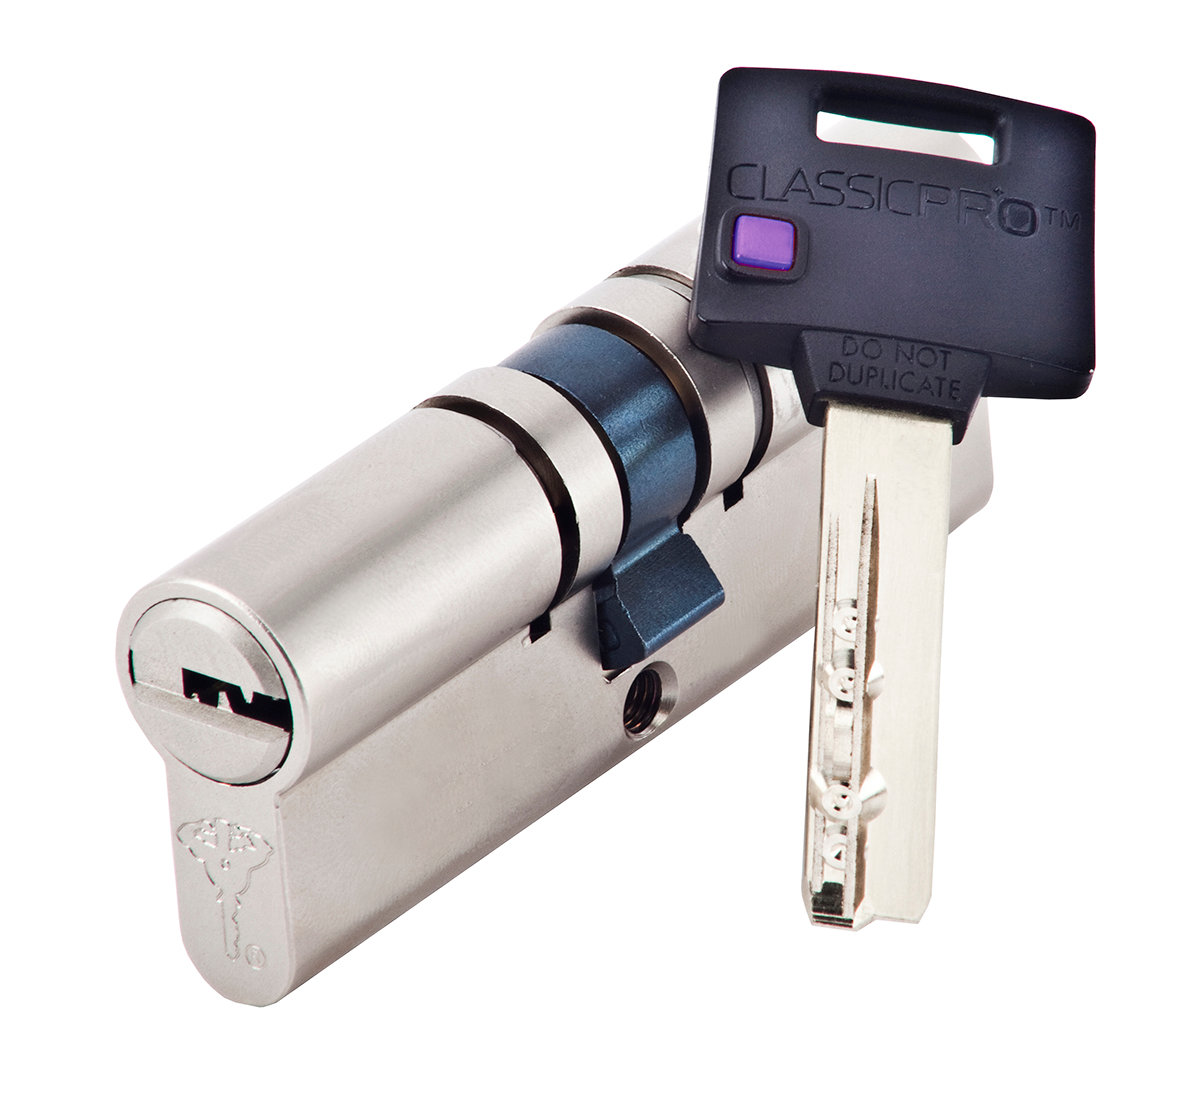 Цилиндр Mul-t-Lock Classic Pro ключ-ключ (размер 31x40 мм) - Никель, Шестеренка (5 ключей)